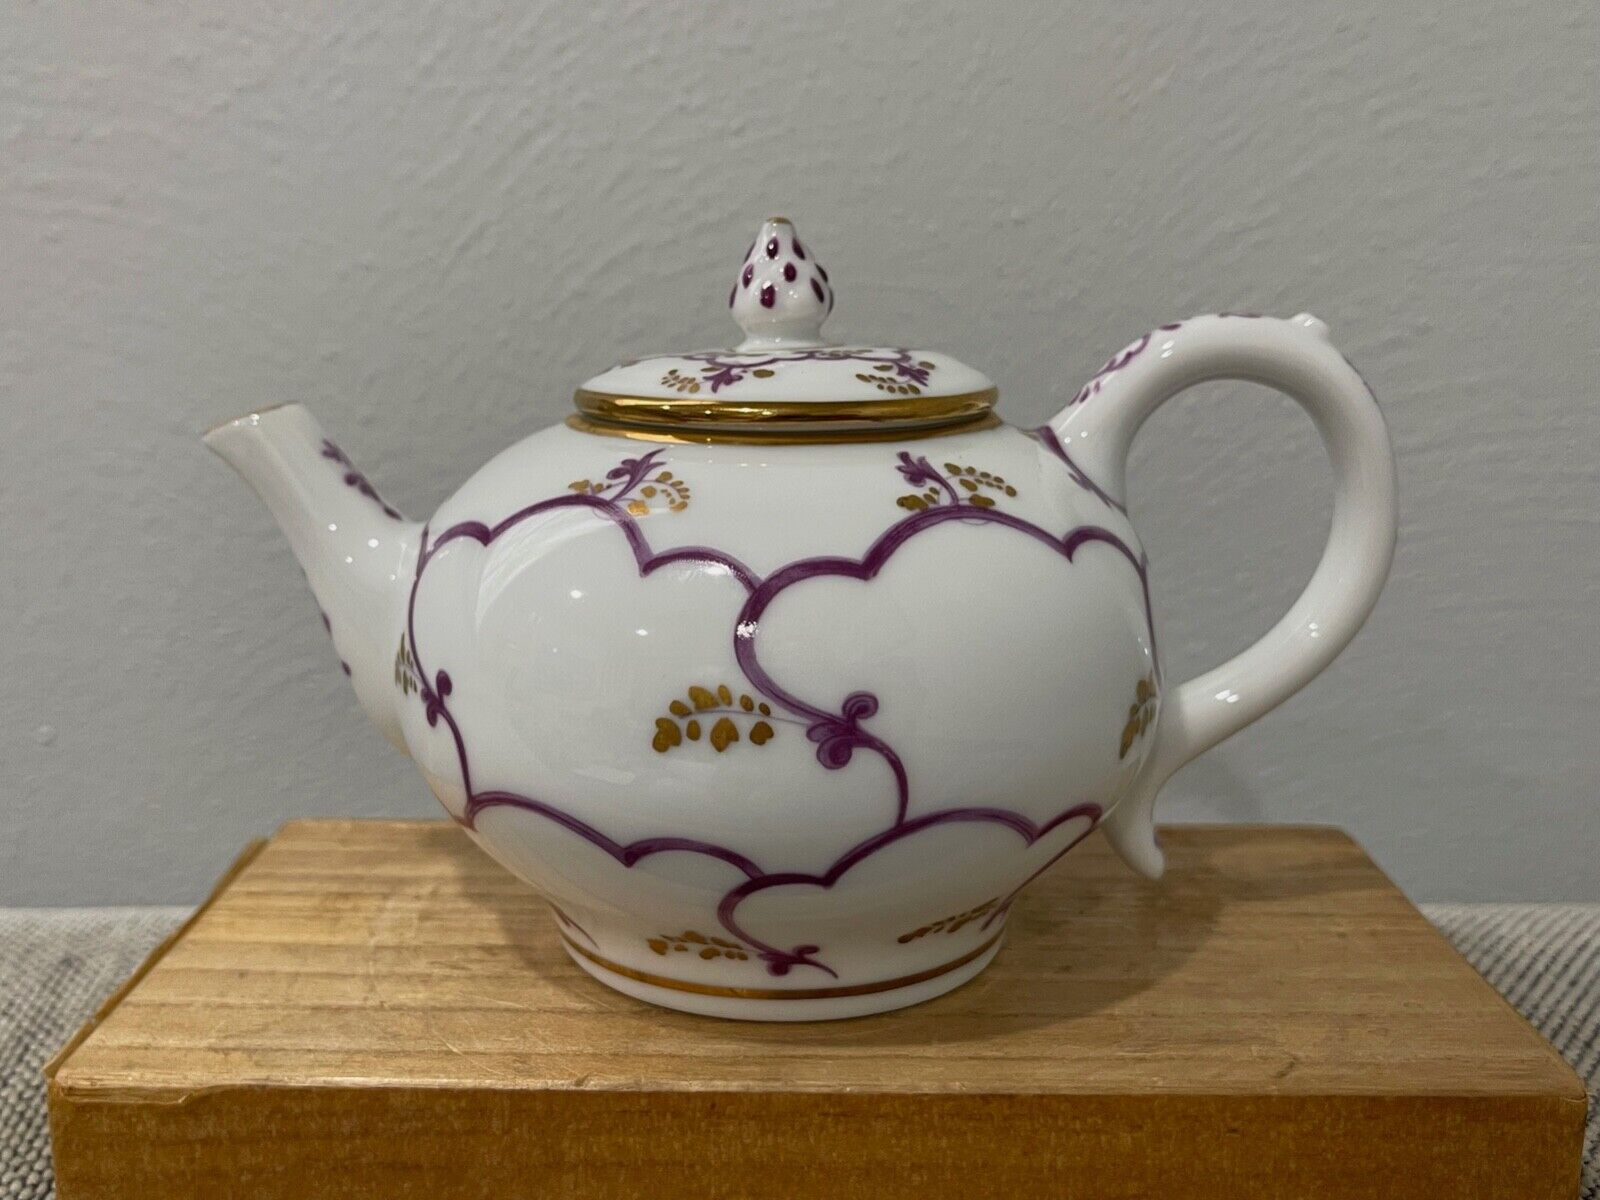 1985 Franklin Mint Victoria and Albert Museum Porcelain Venice Miniature Teapot